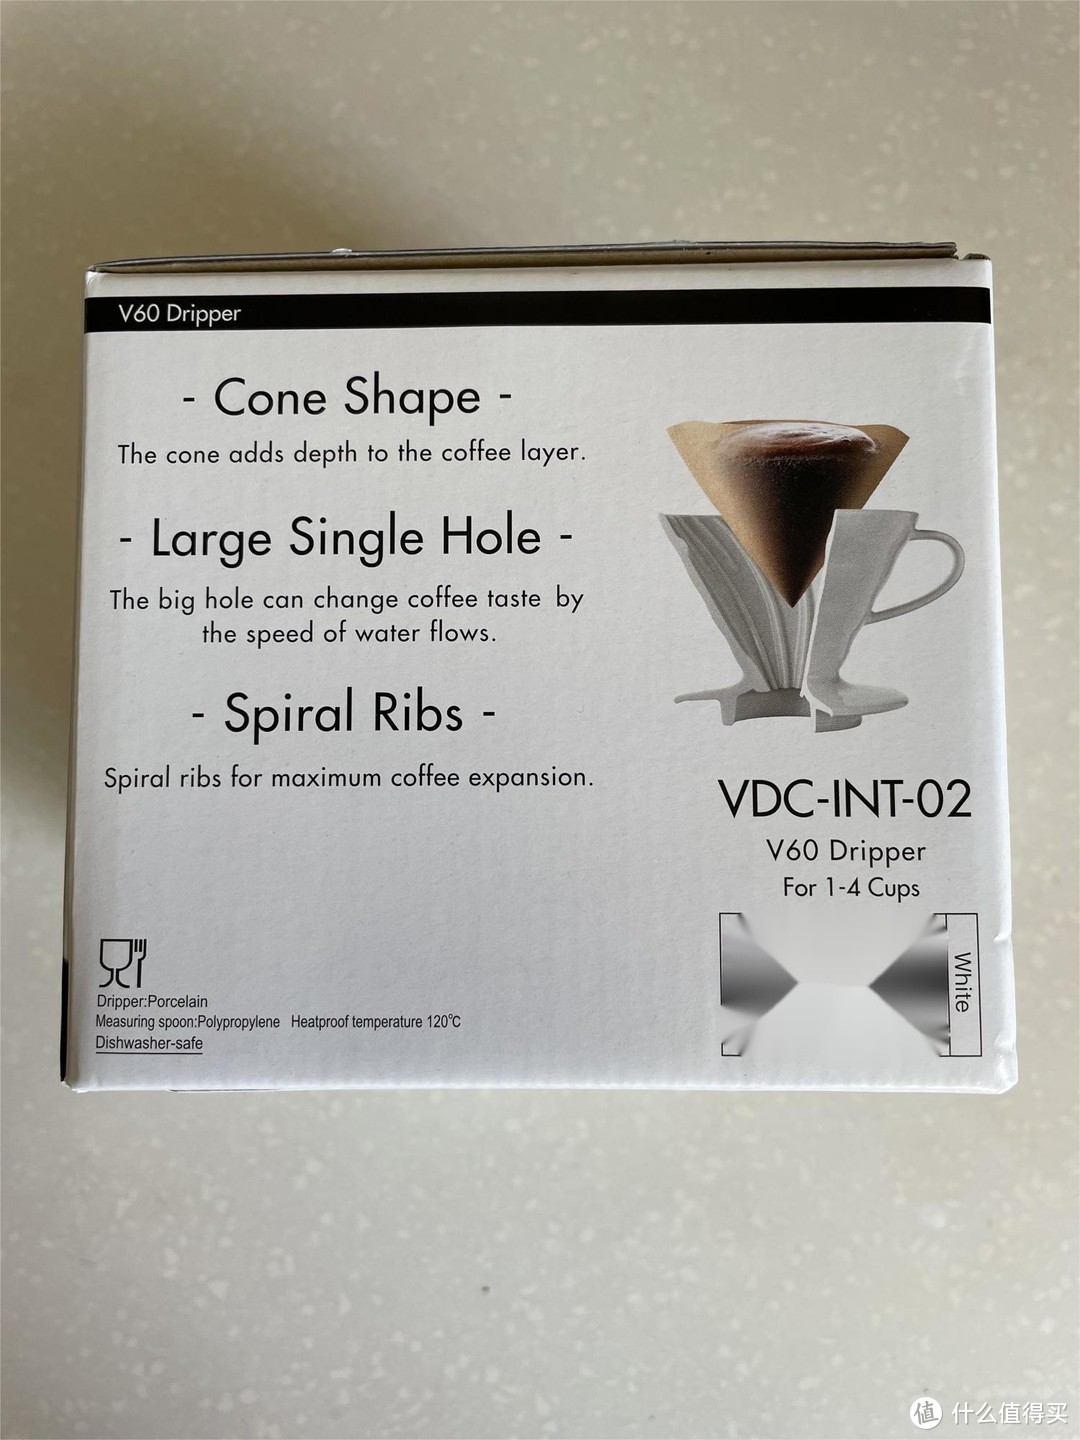 HARIO V60陶瓷手冲咖啡过滤杯